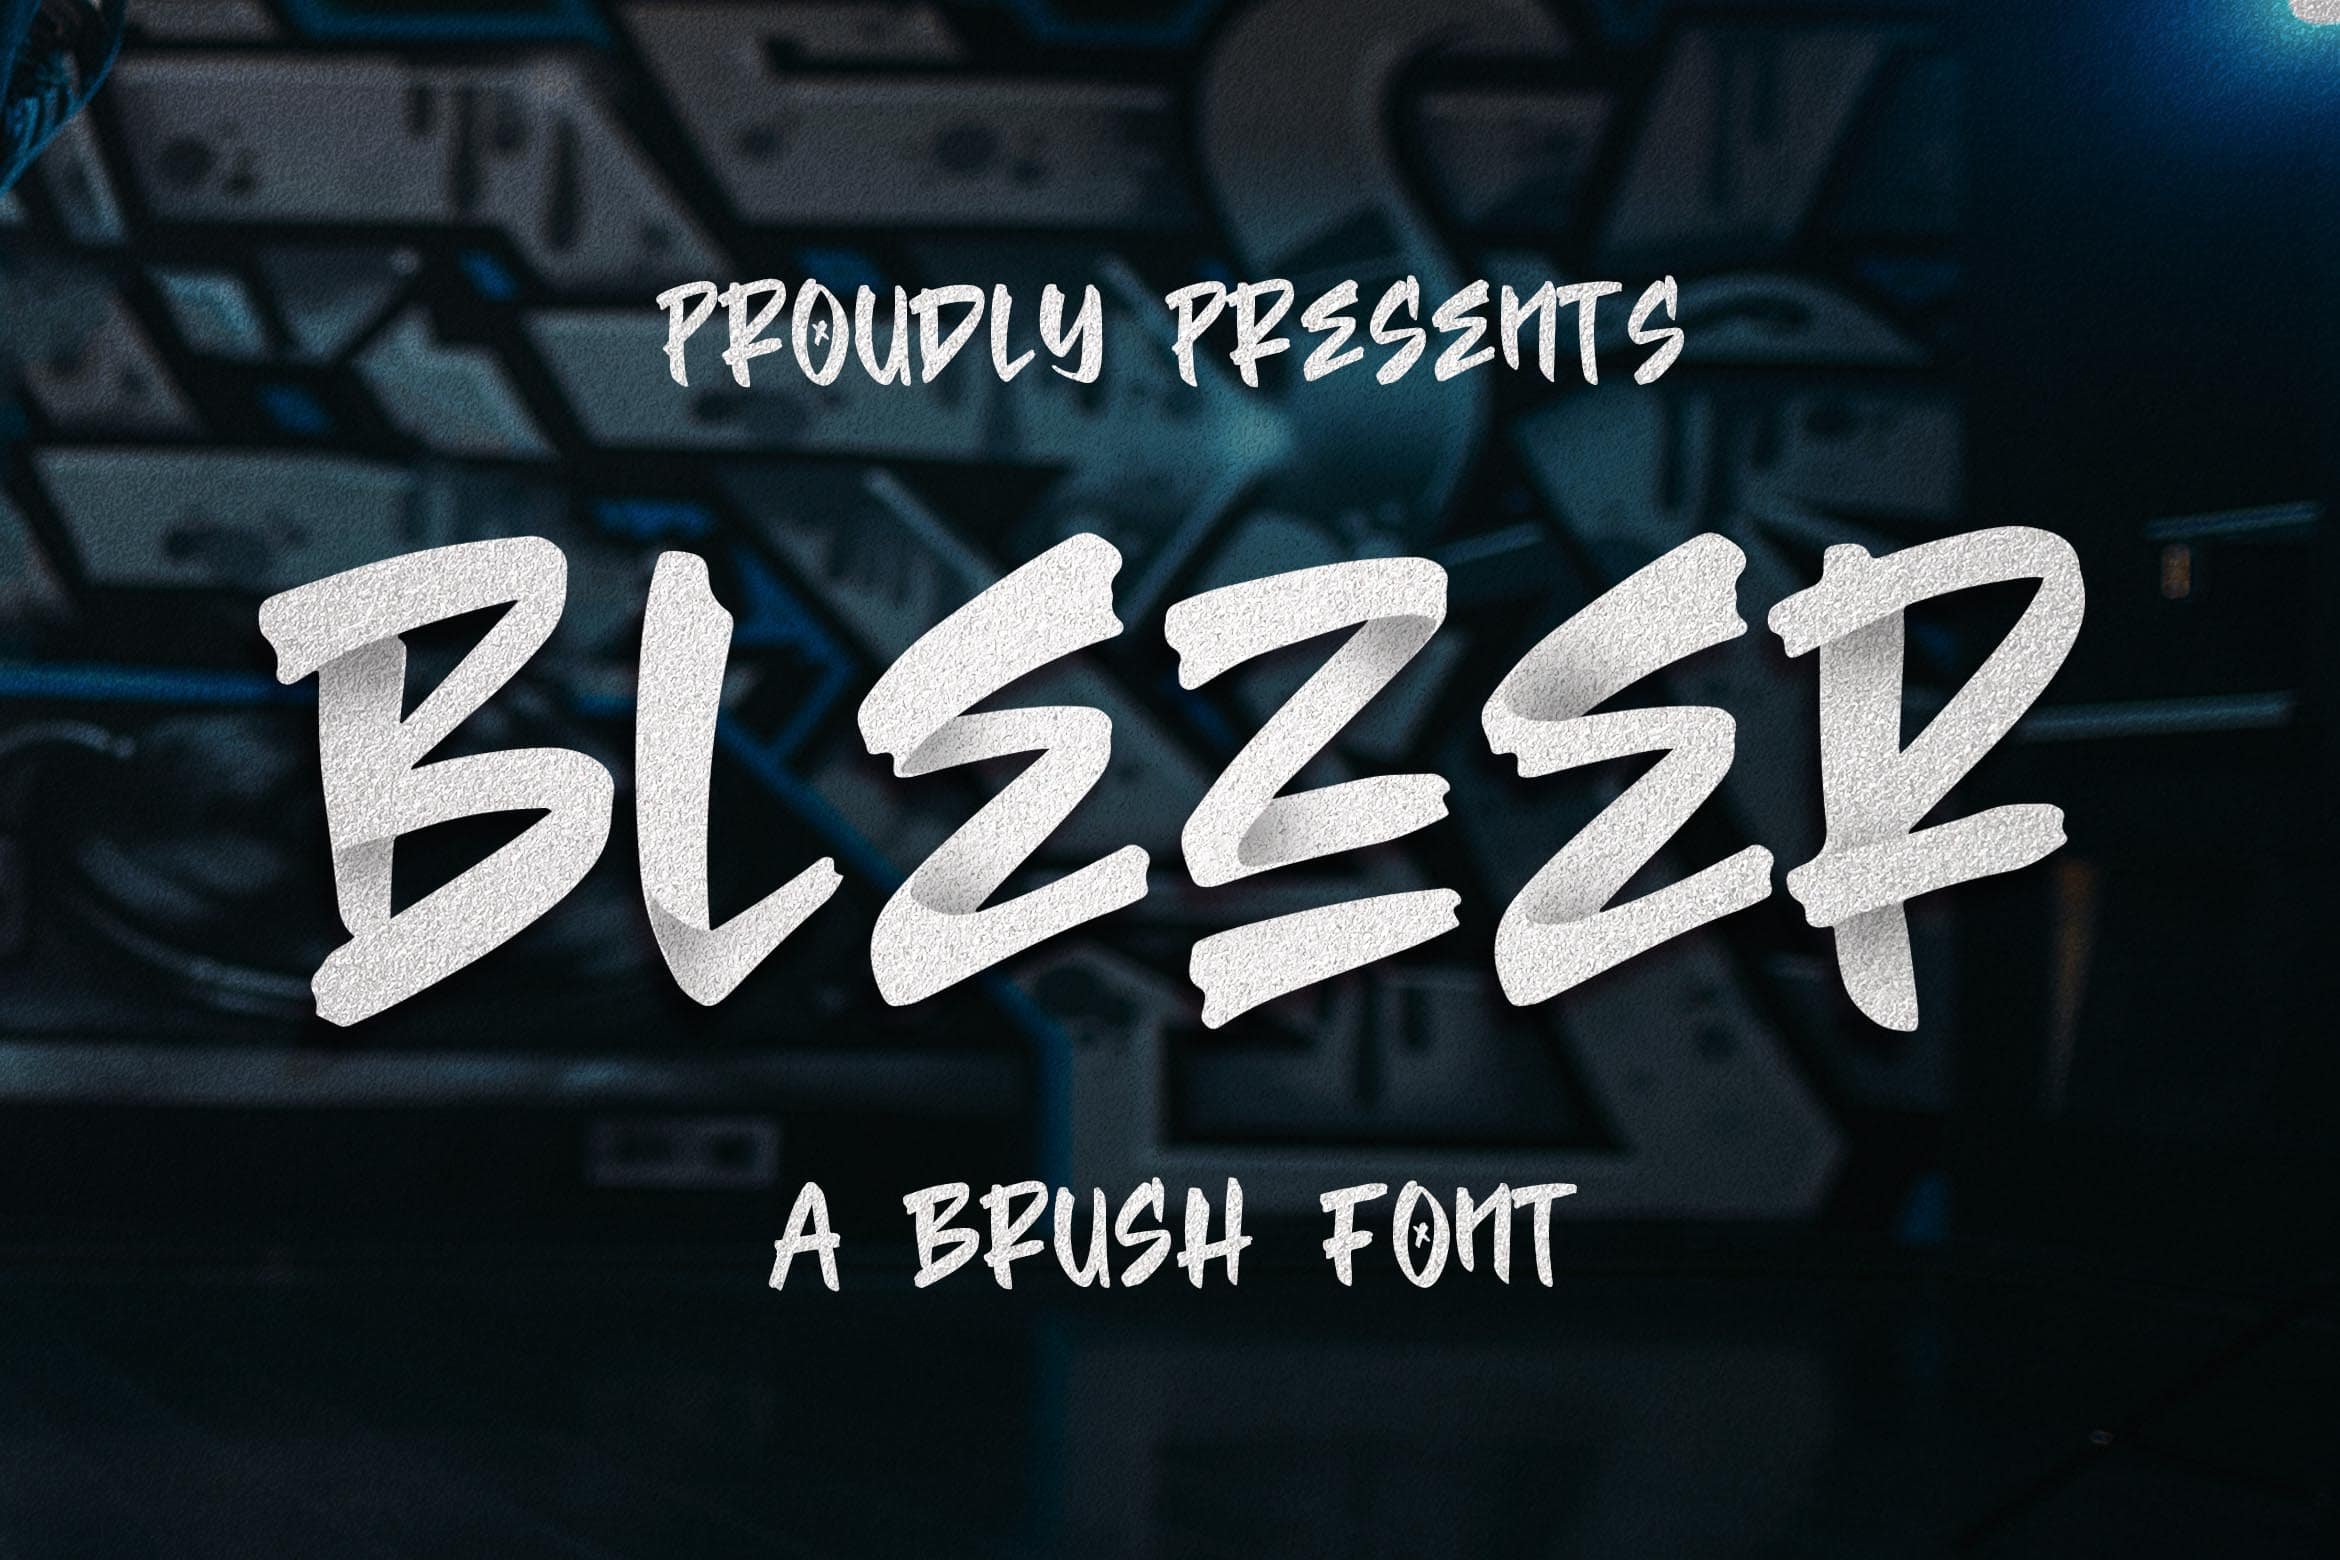 Blezer Clean Brush Font cover image.